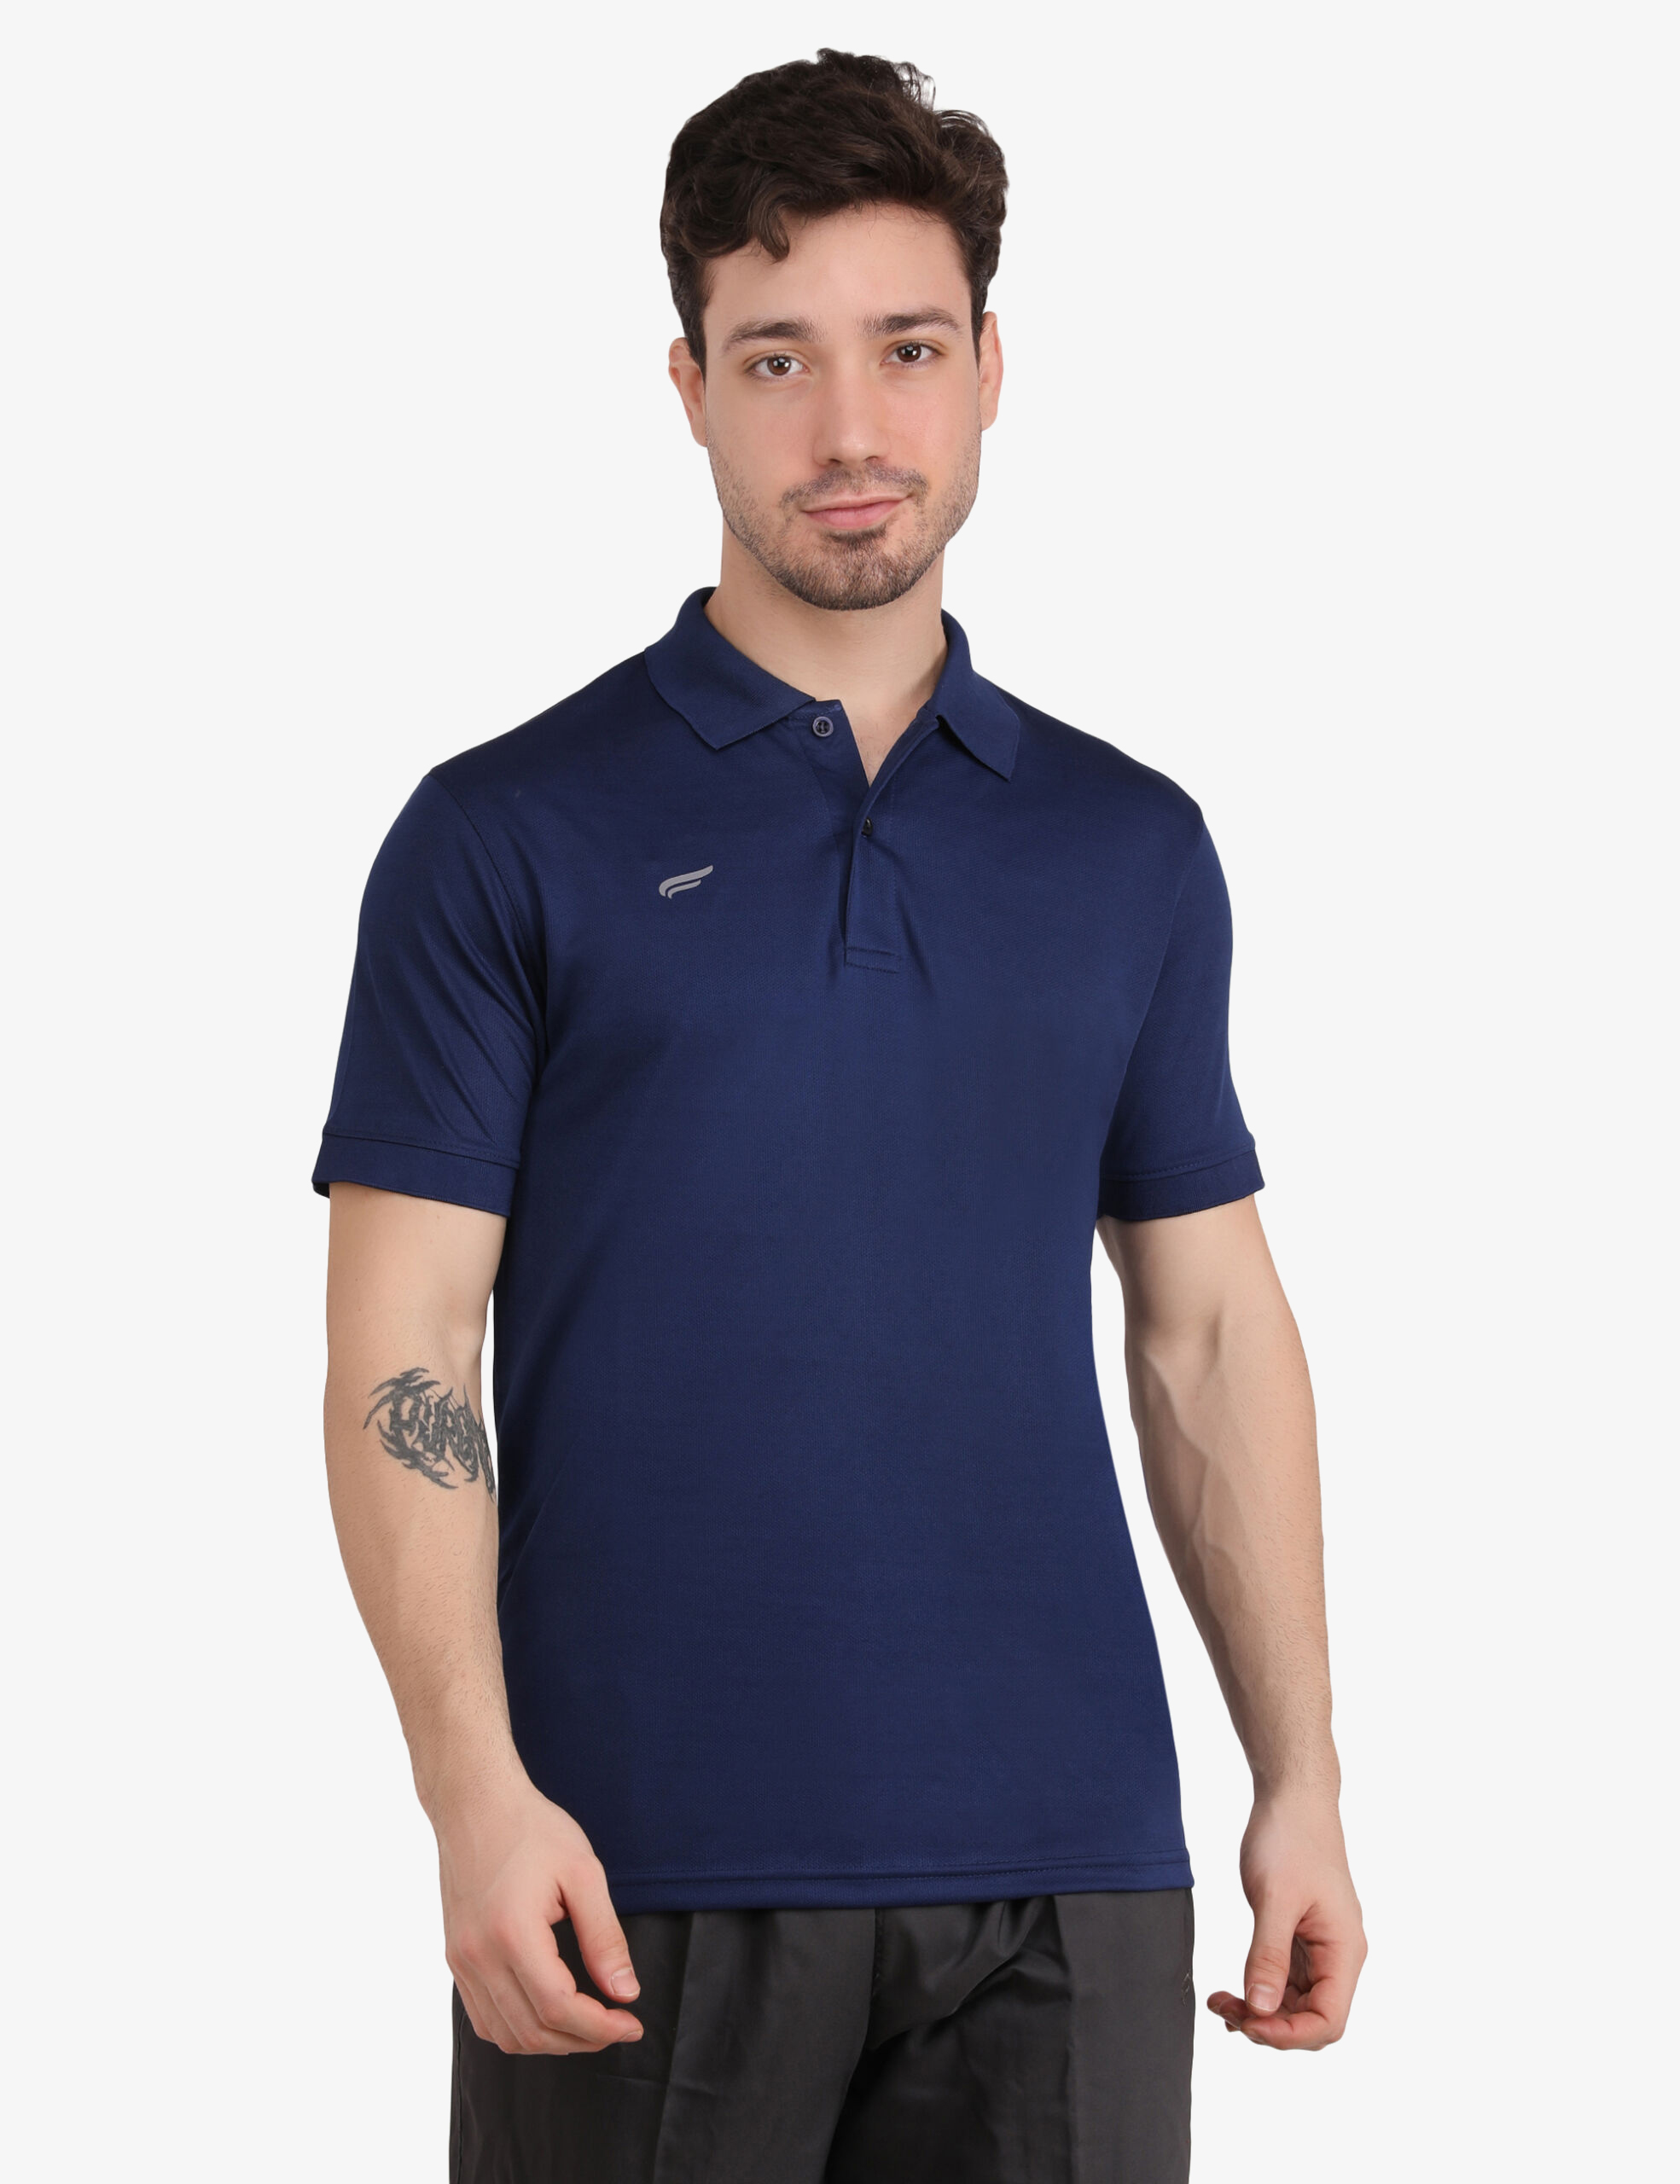 ASI GenX Navy Blue T-Shirt for Men